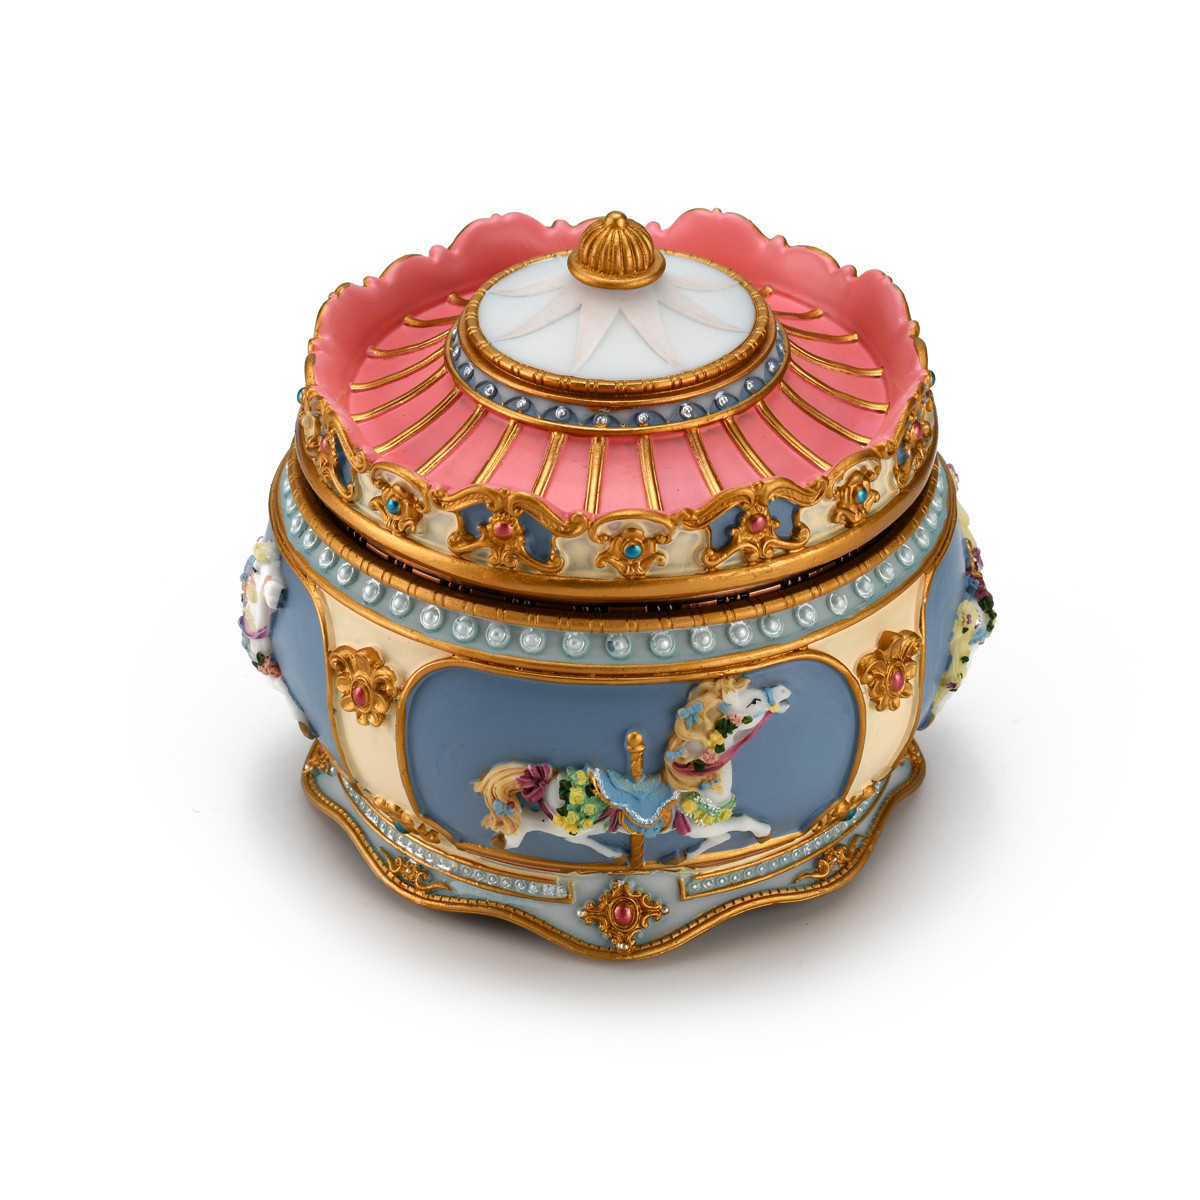 Image of Carousel Themed Animated Musical Carousel Box